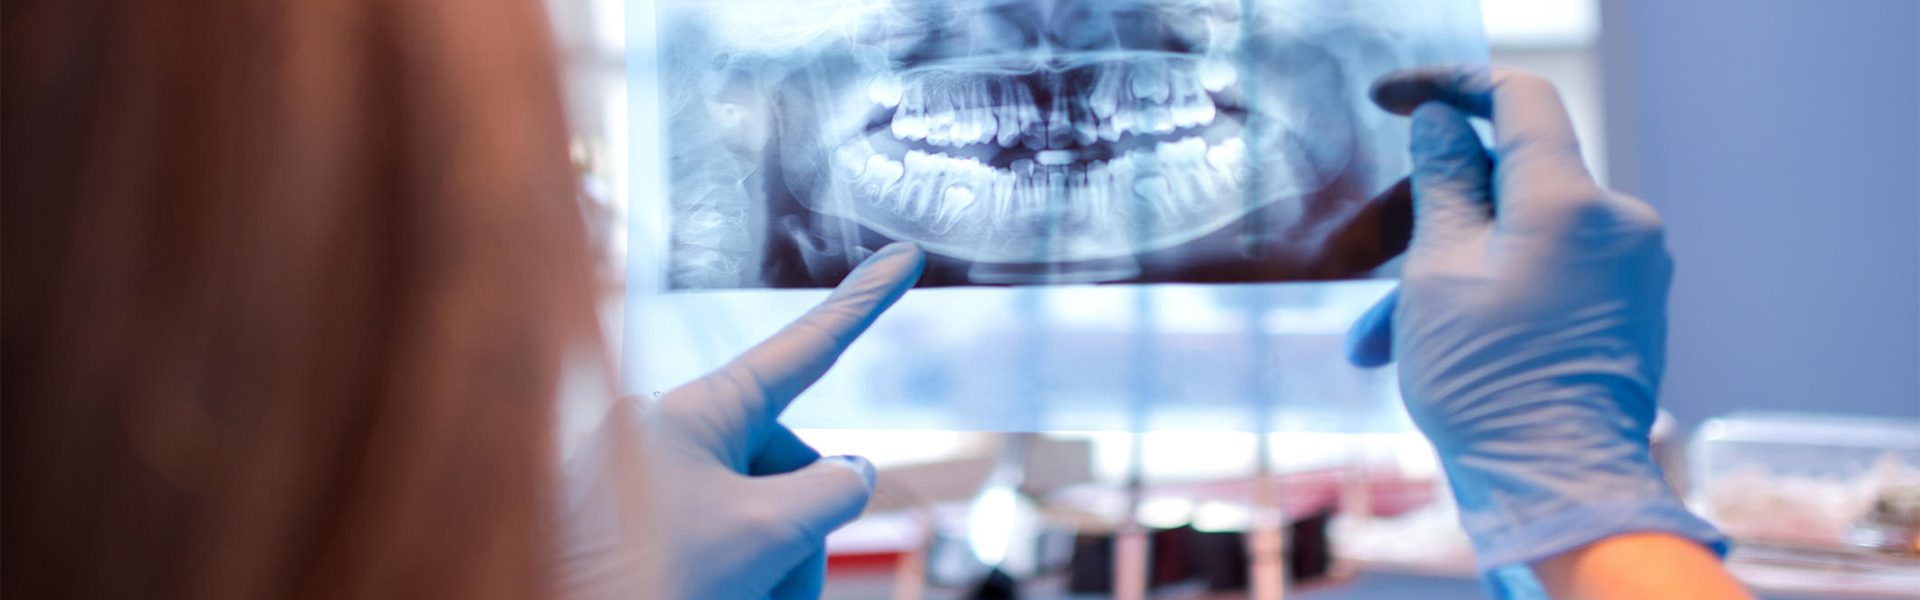 Why do we take dental x-rays?